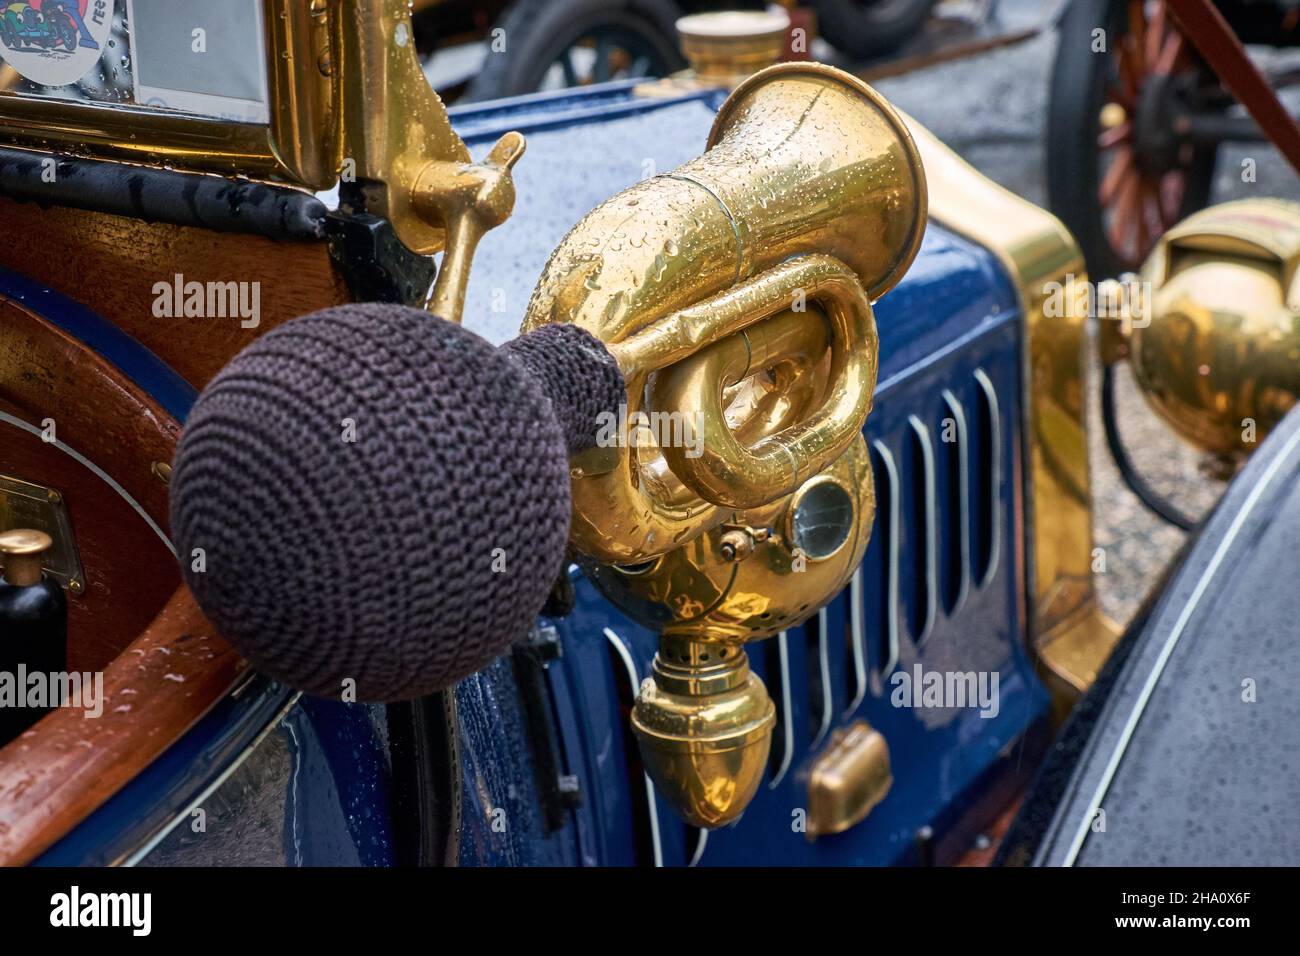 Motor-Horn. Motor Horn Messing montiert auf rot 1911 Pierce Arrow Auto.  Veteran, antik, Messing-Ära Auto Stockfotografie - Alamy